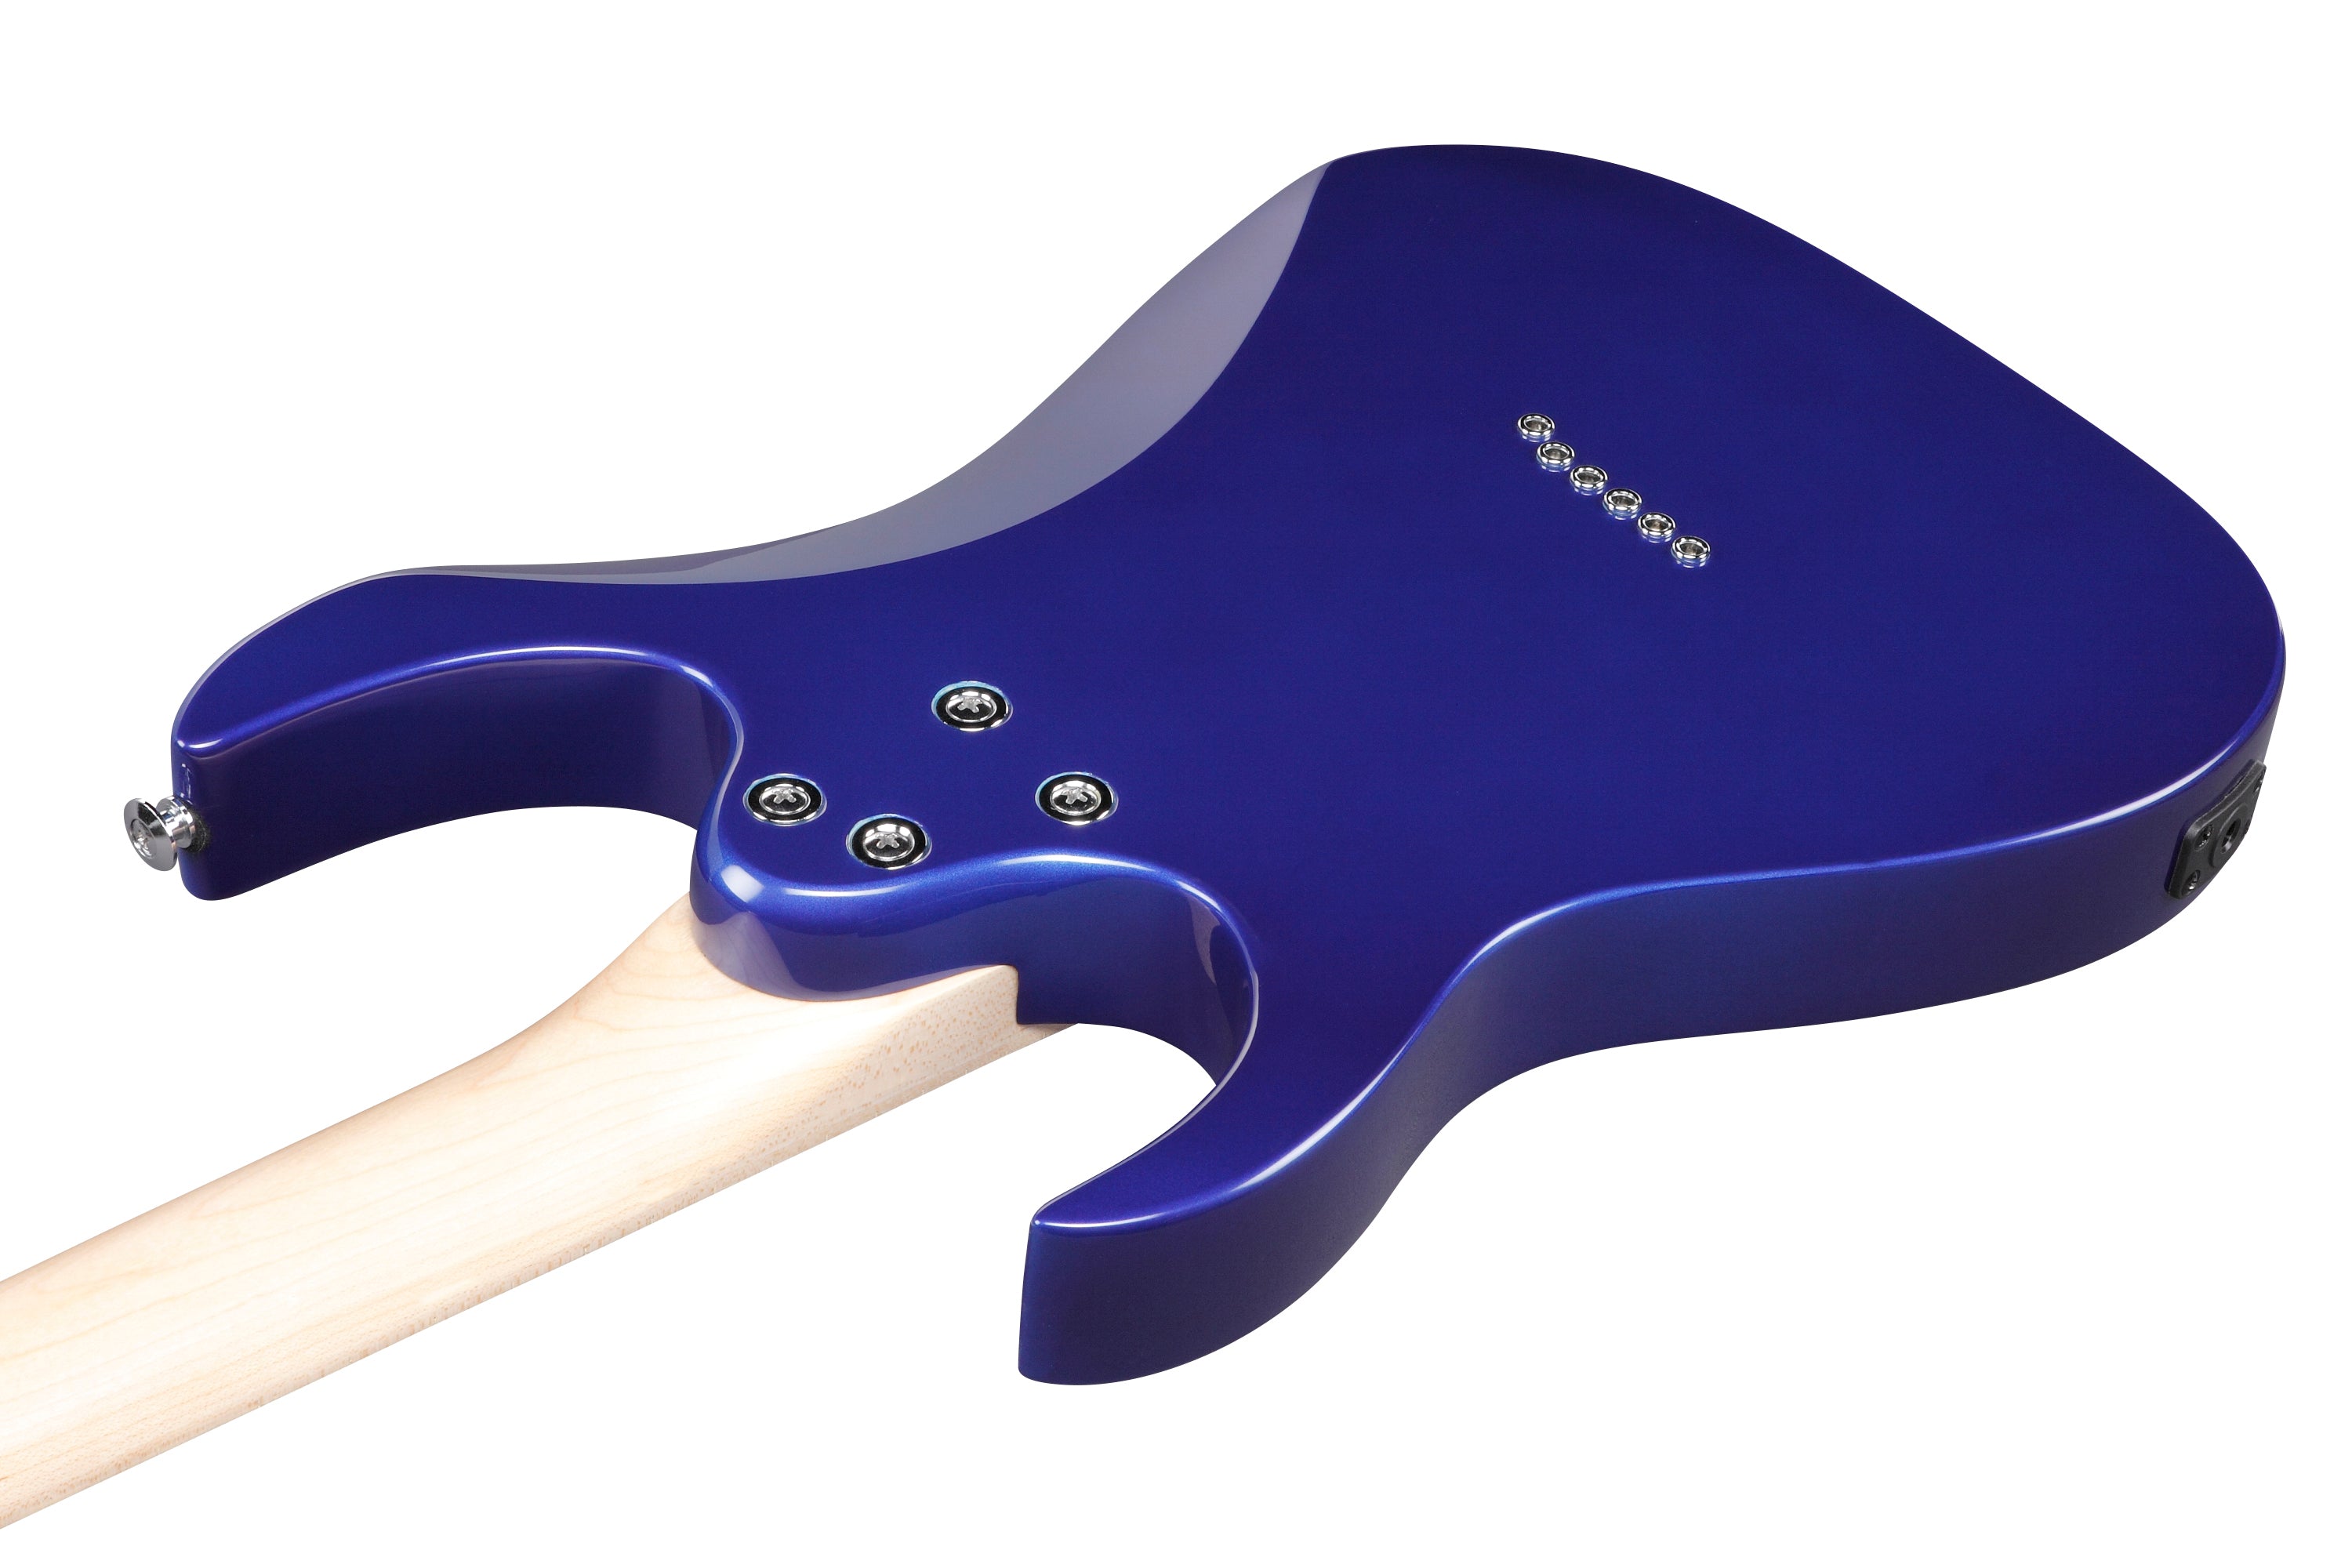 Ibanez GRGM21 Miko Electric Guitar (Jewel Blue)